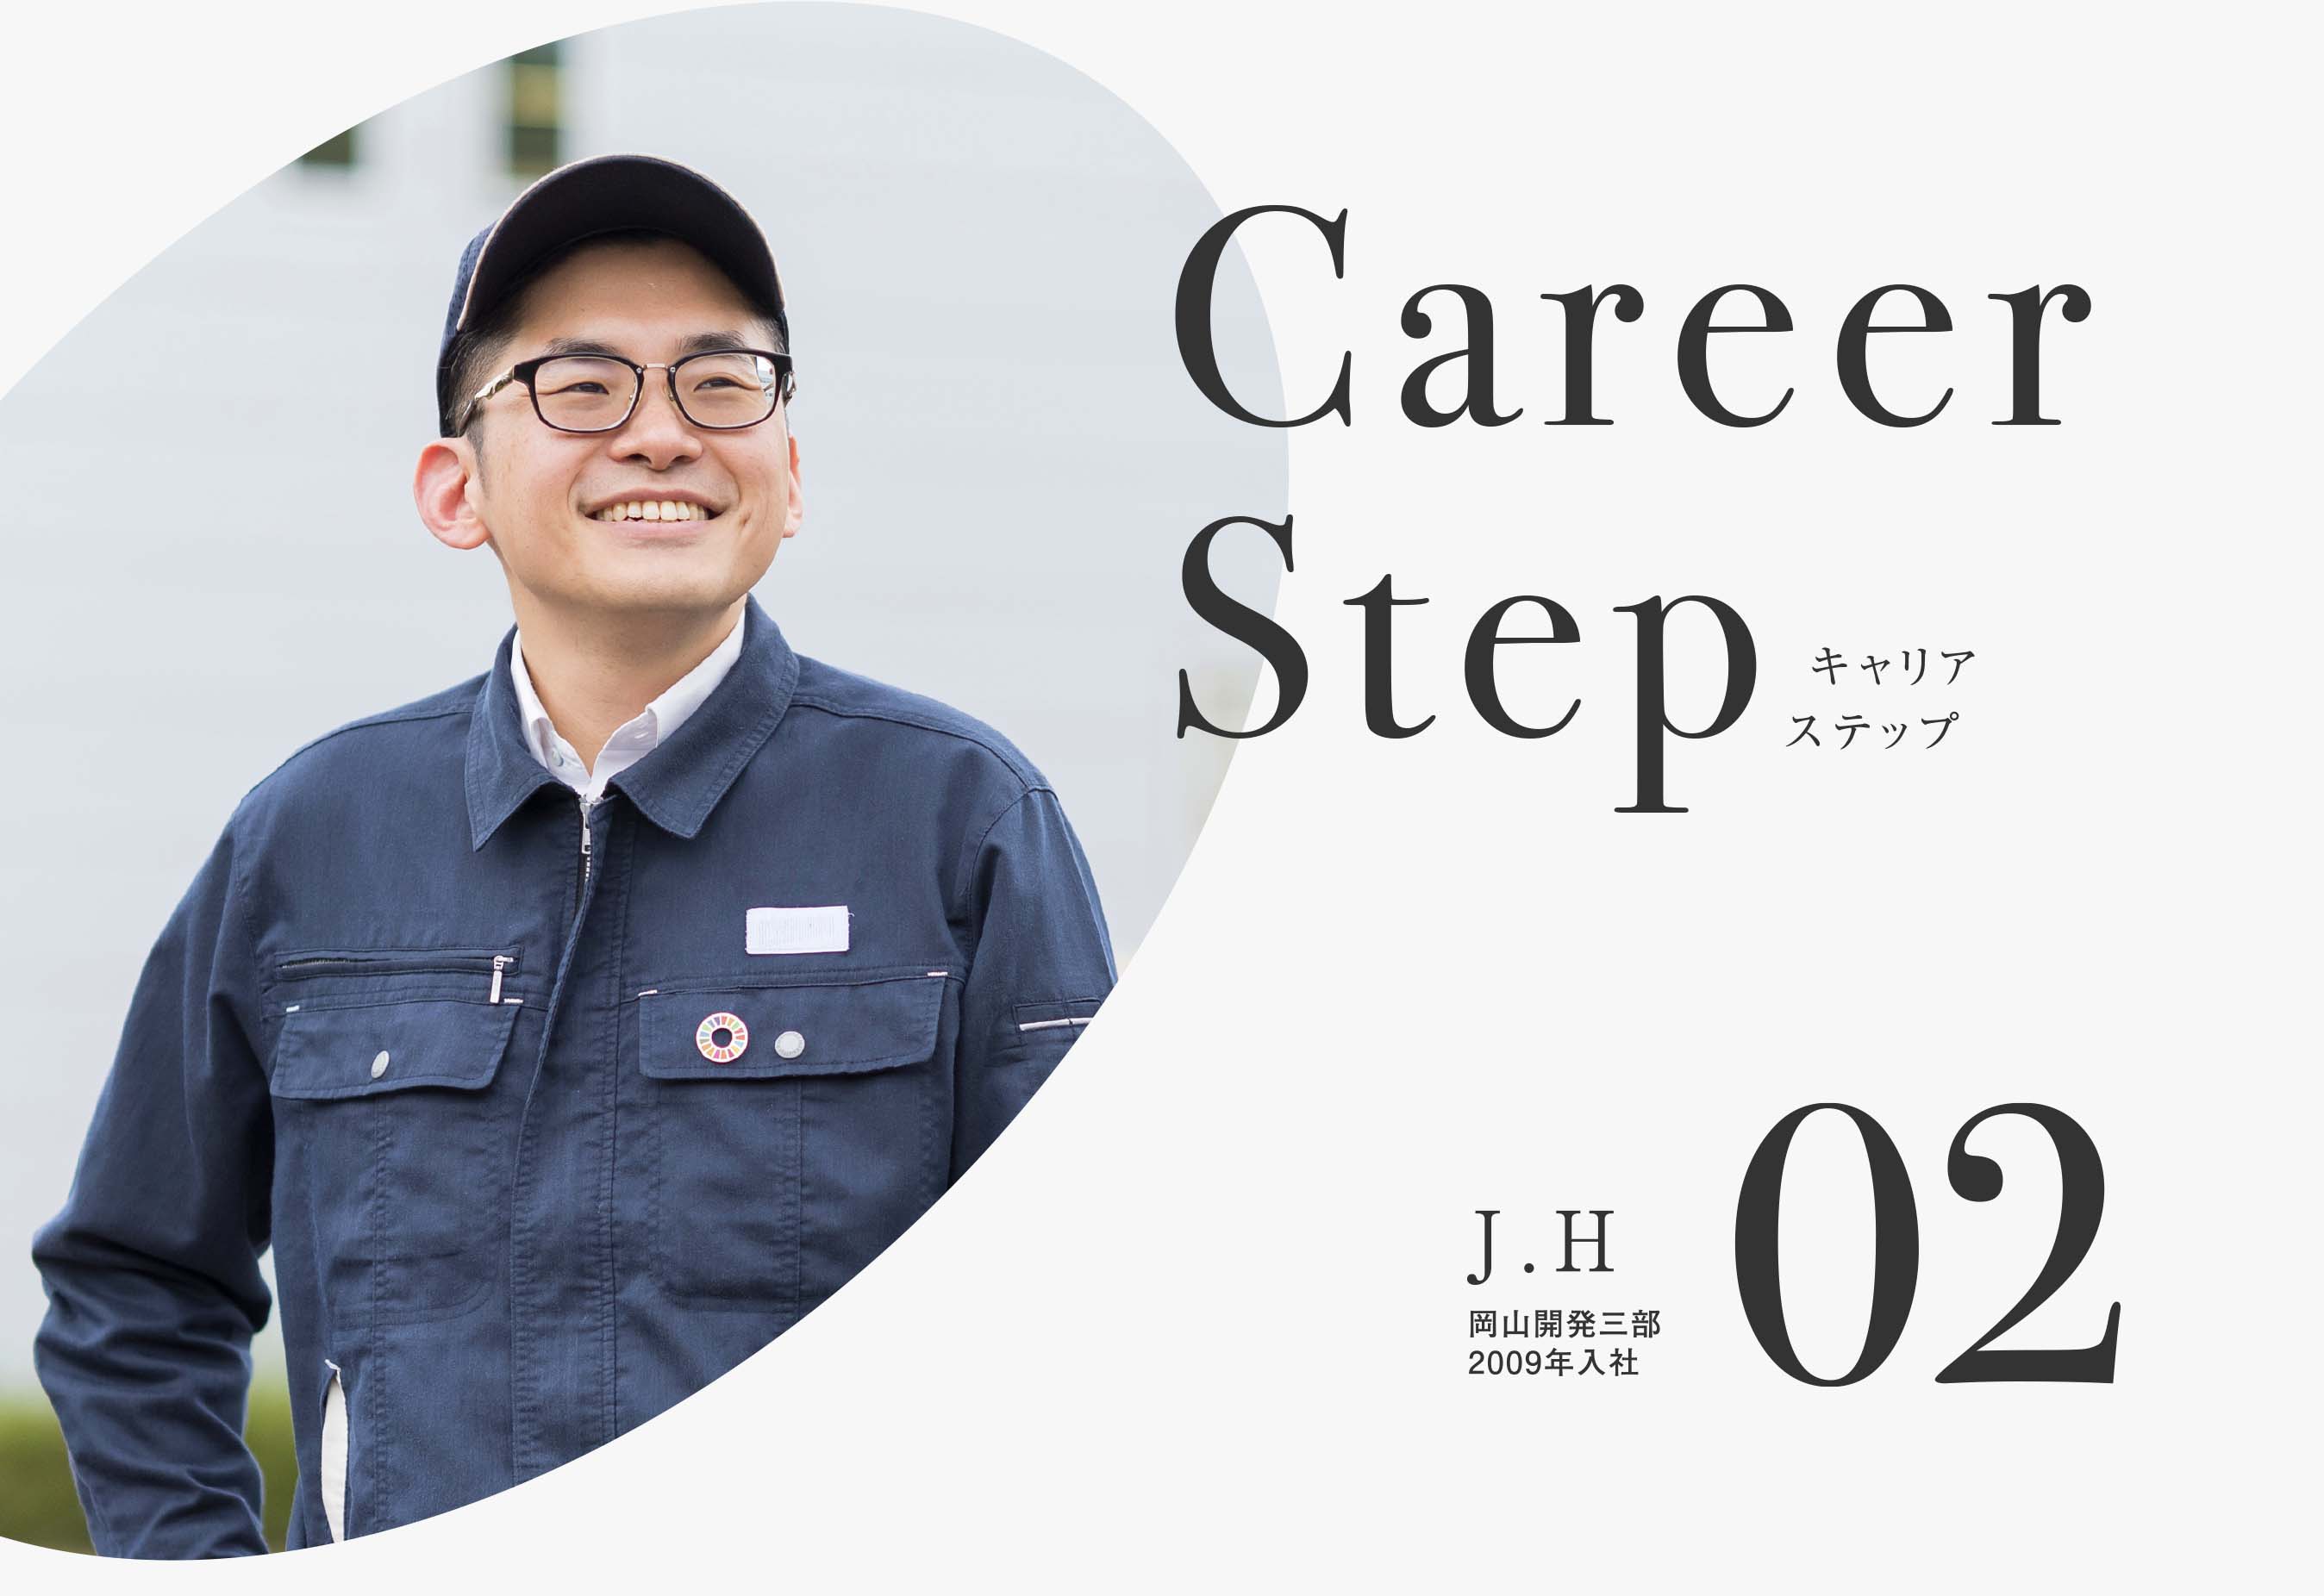 Career Step 堀田 丈智